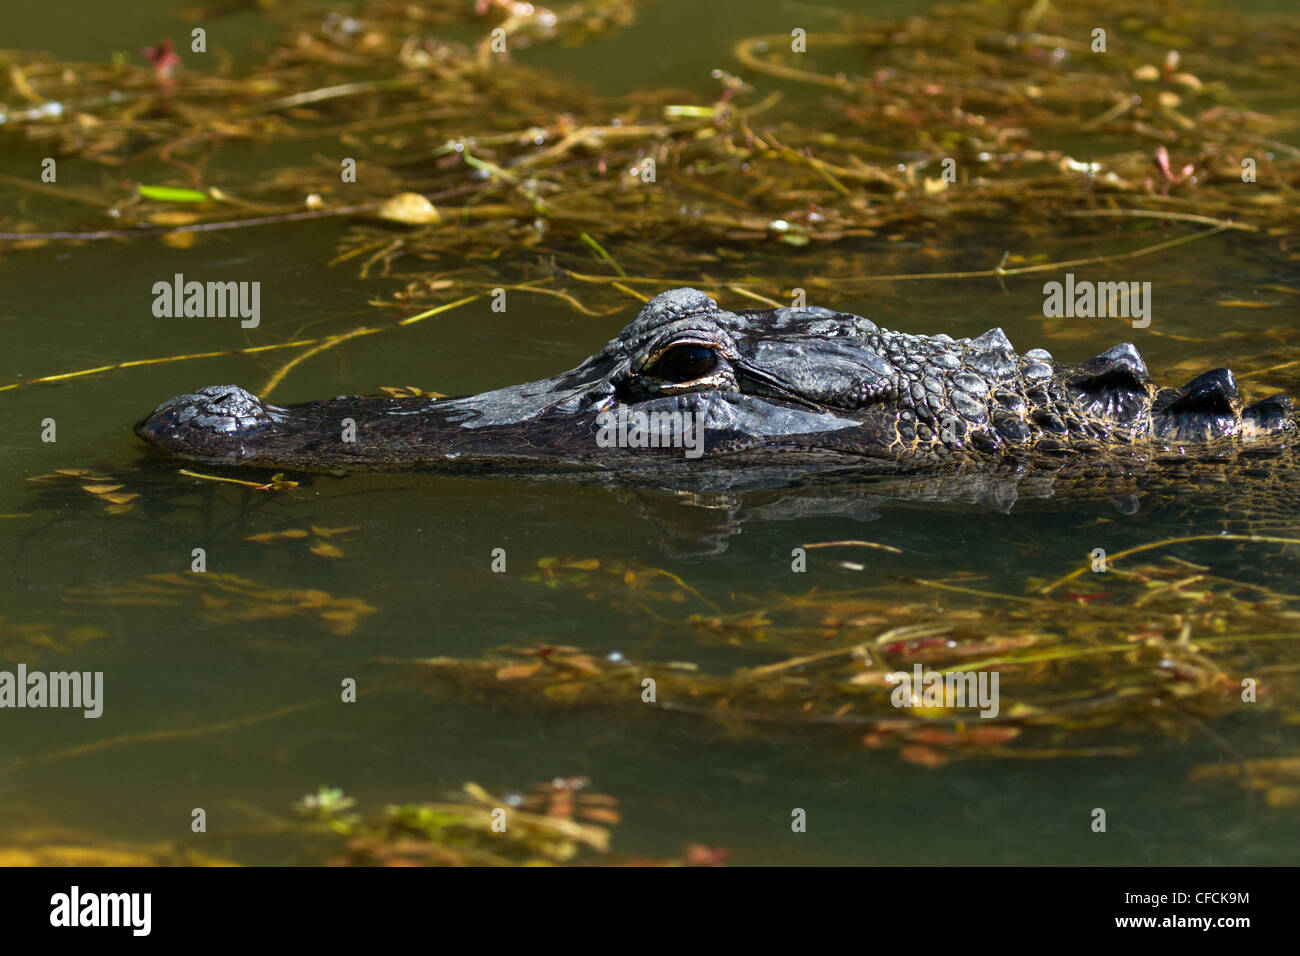 American alligator (Alligator mississippiensis) in the water. Stock Photo